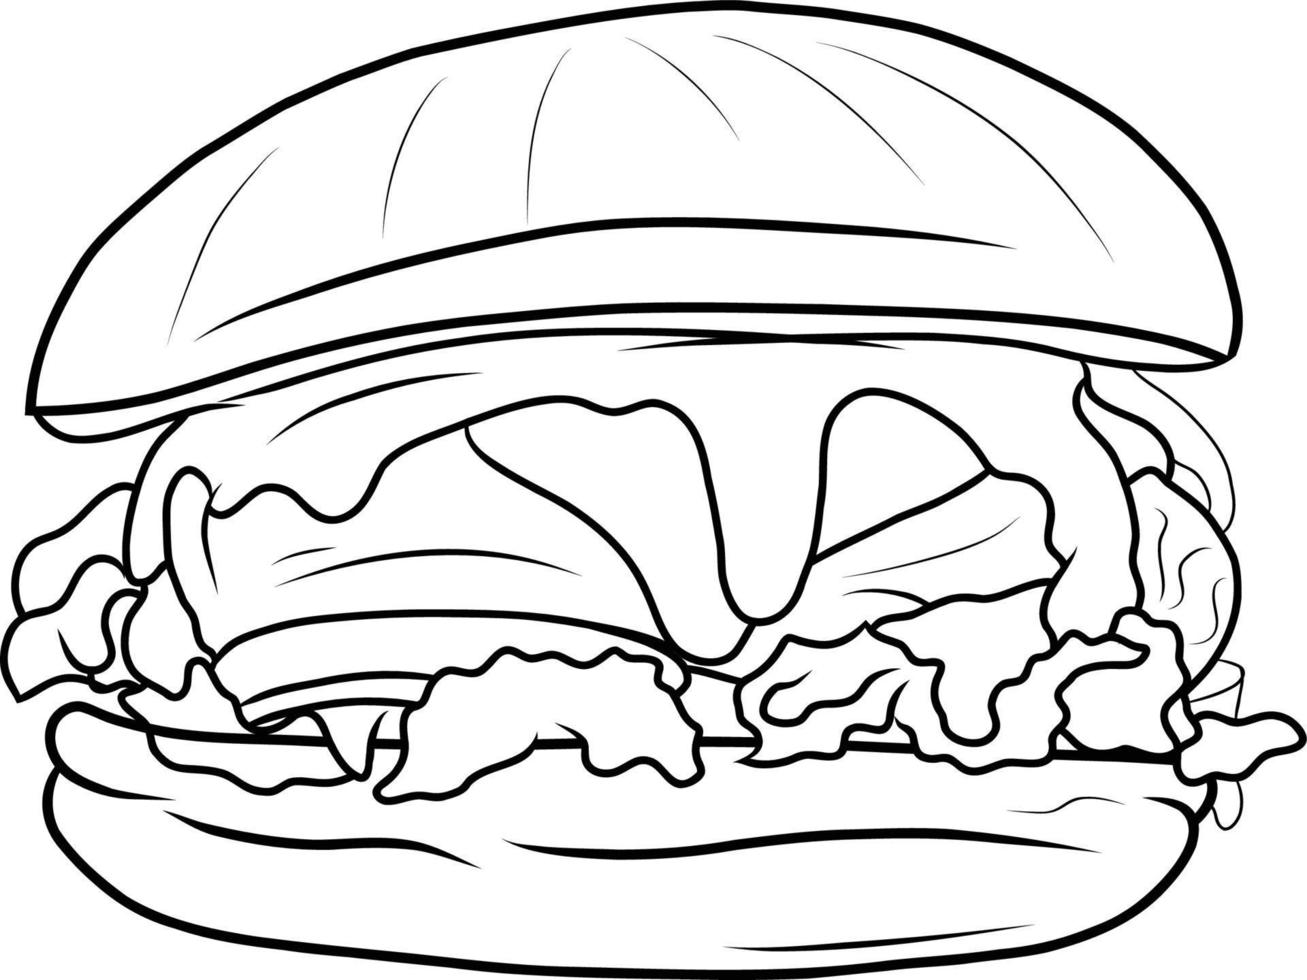 Hand Drawn Cheese Hamburger Isolated vector